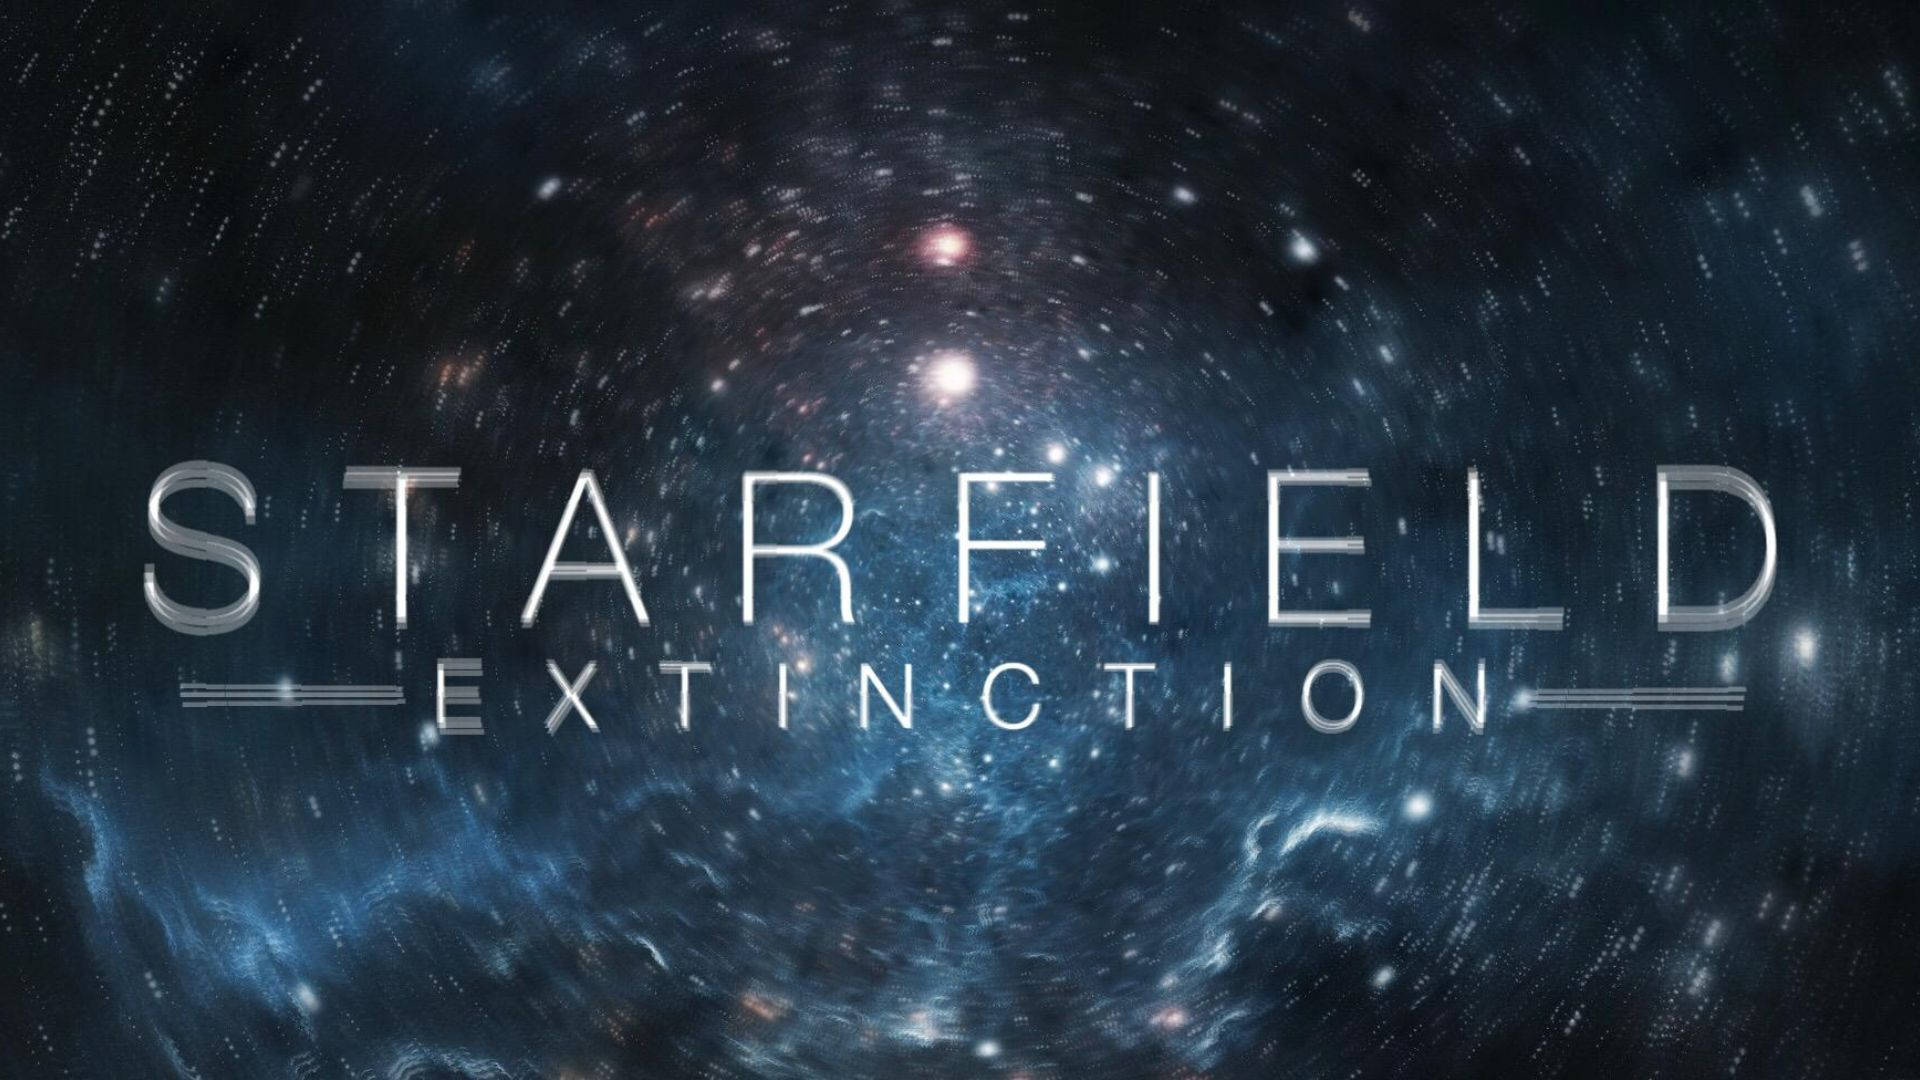 Starfield Extinction In Galaxy Wallpaper